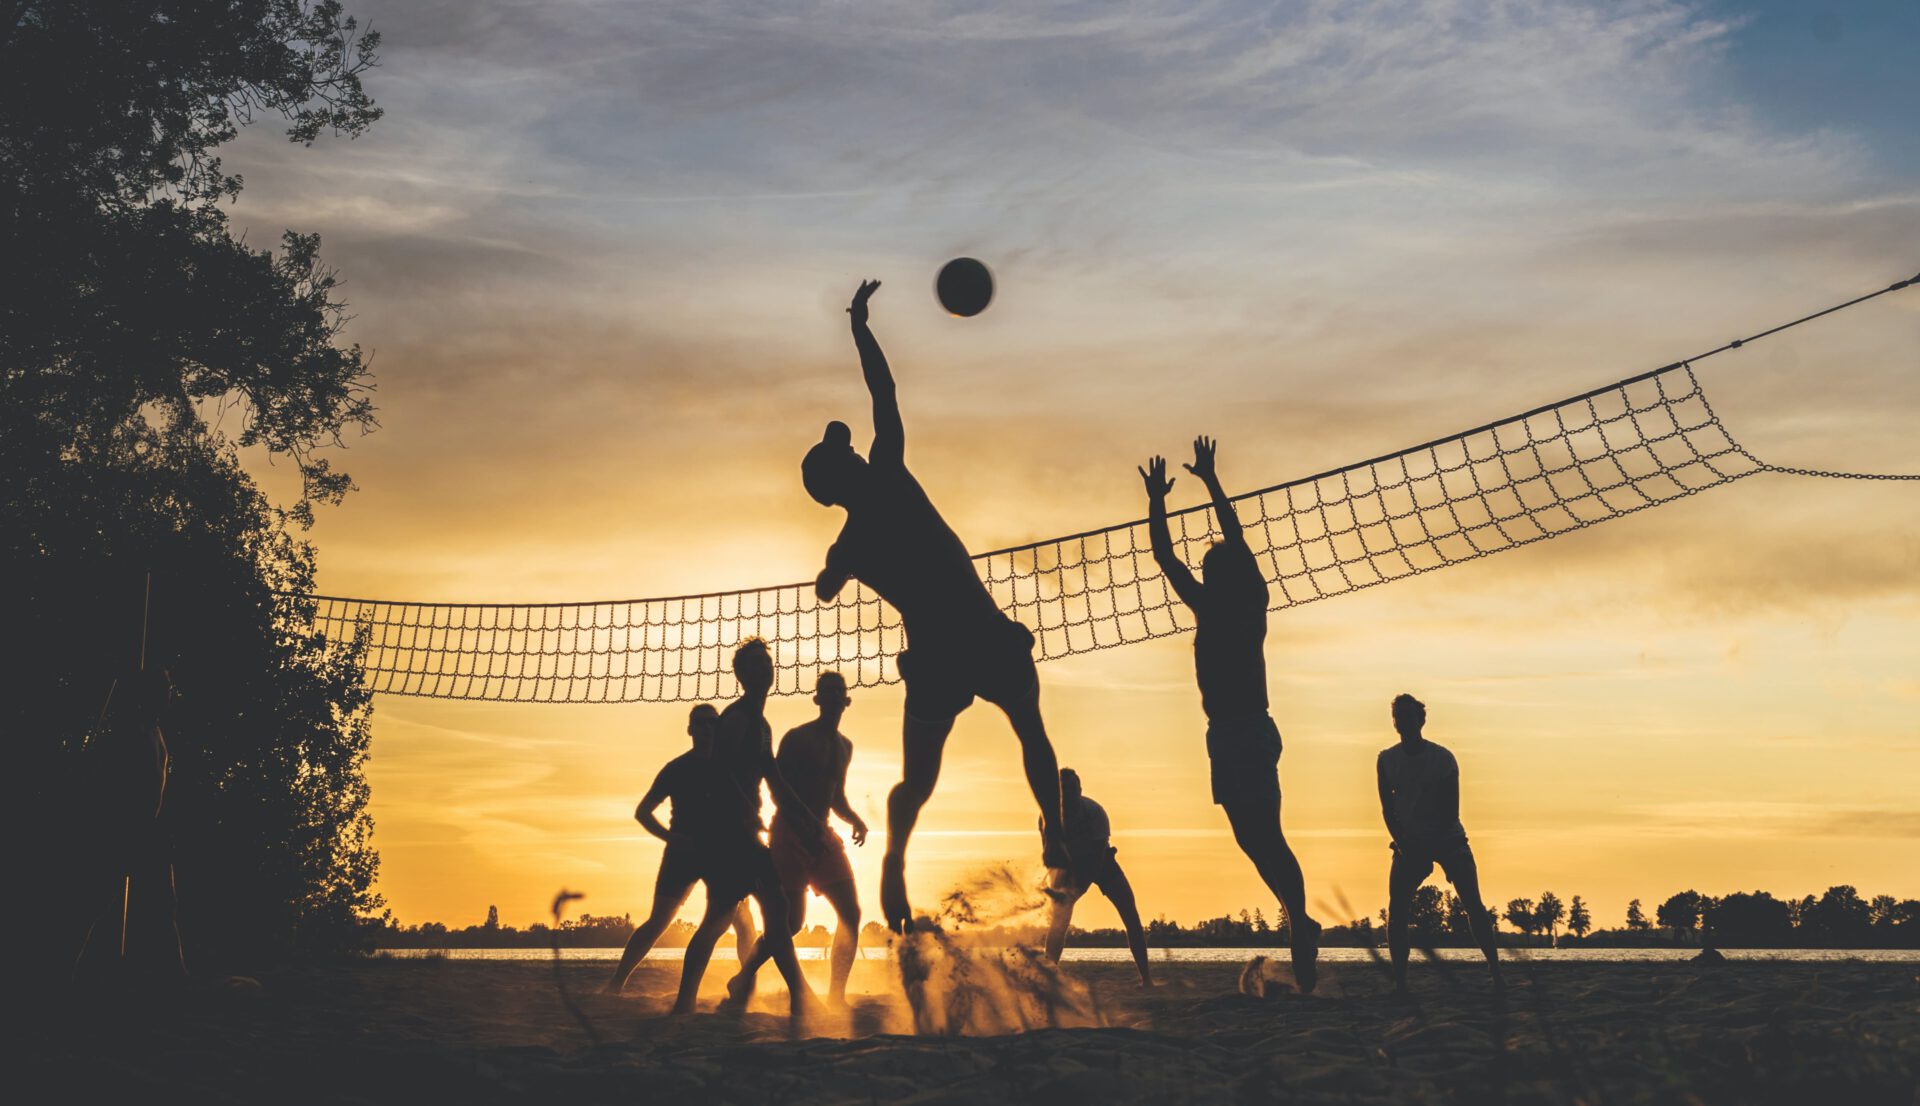 Gruppe von Menschen spielt Beachvolleyball am Strand bei Sonnenuntergang.